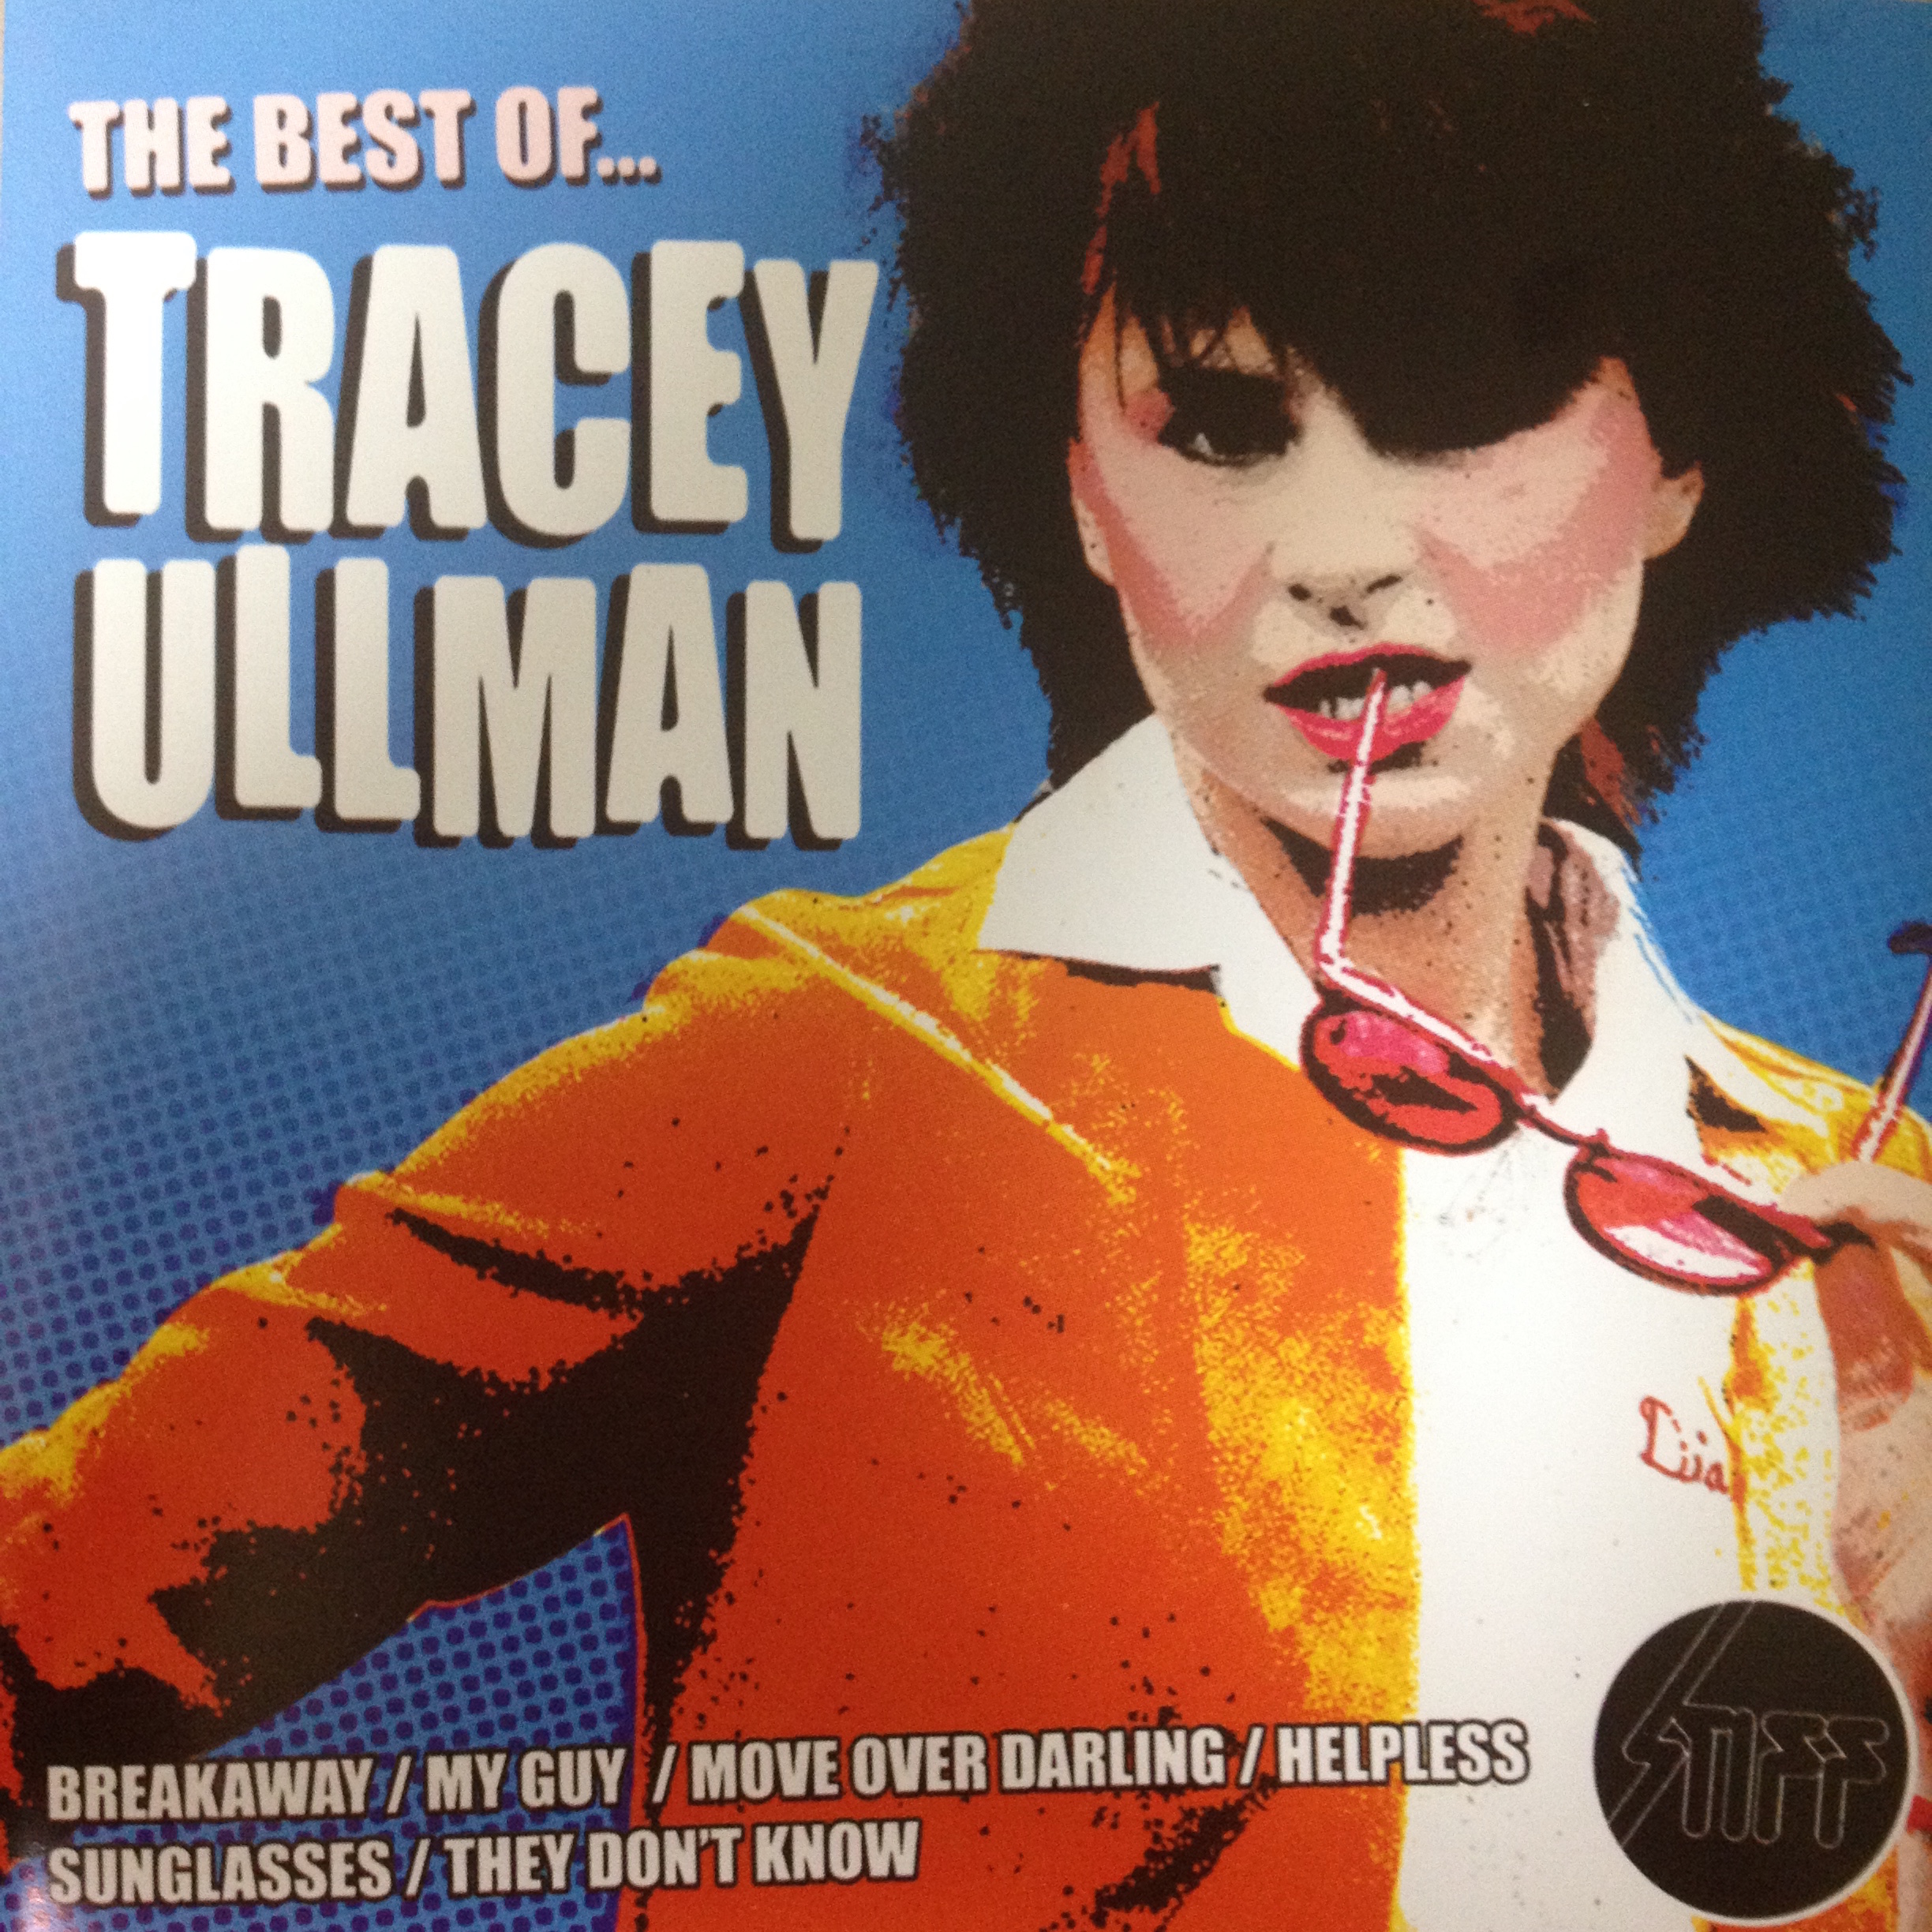 TRACEY ULLMAN 「BREAKAWAY」「GIVE HIM A GREAT BIG KIS